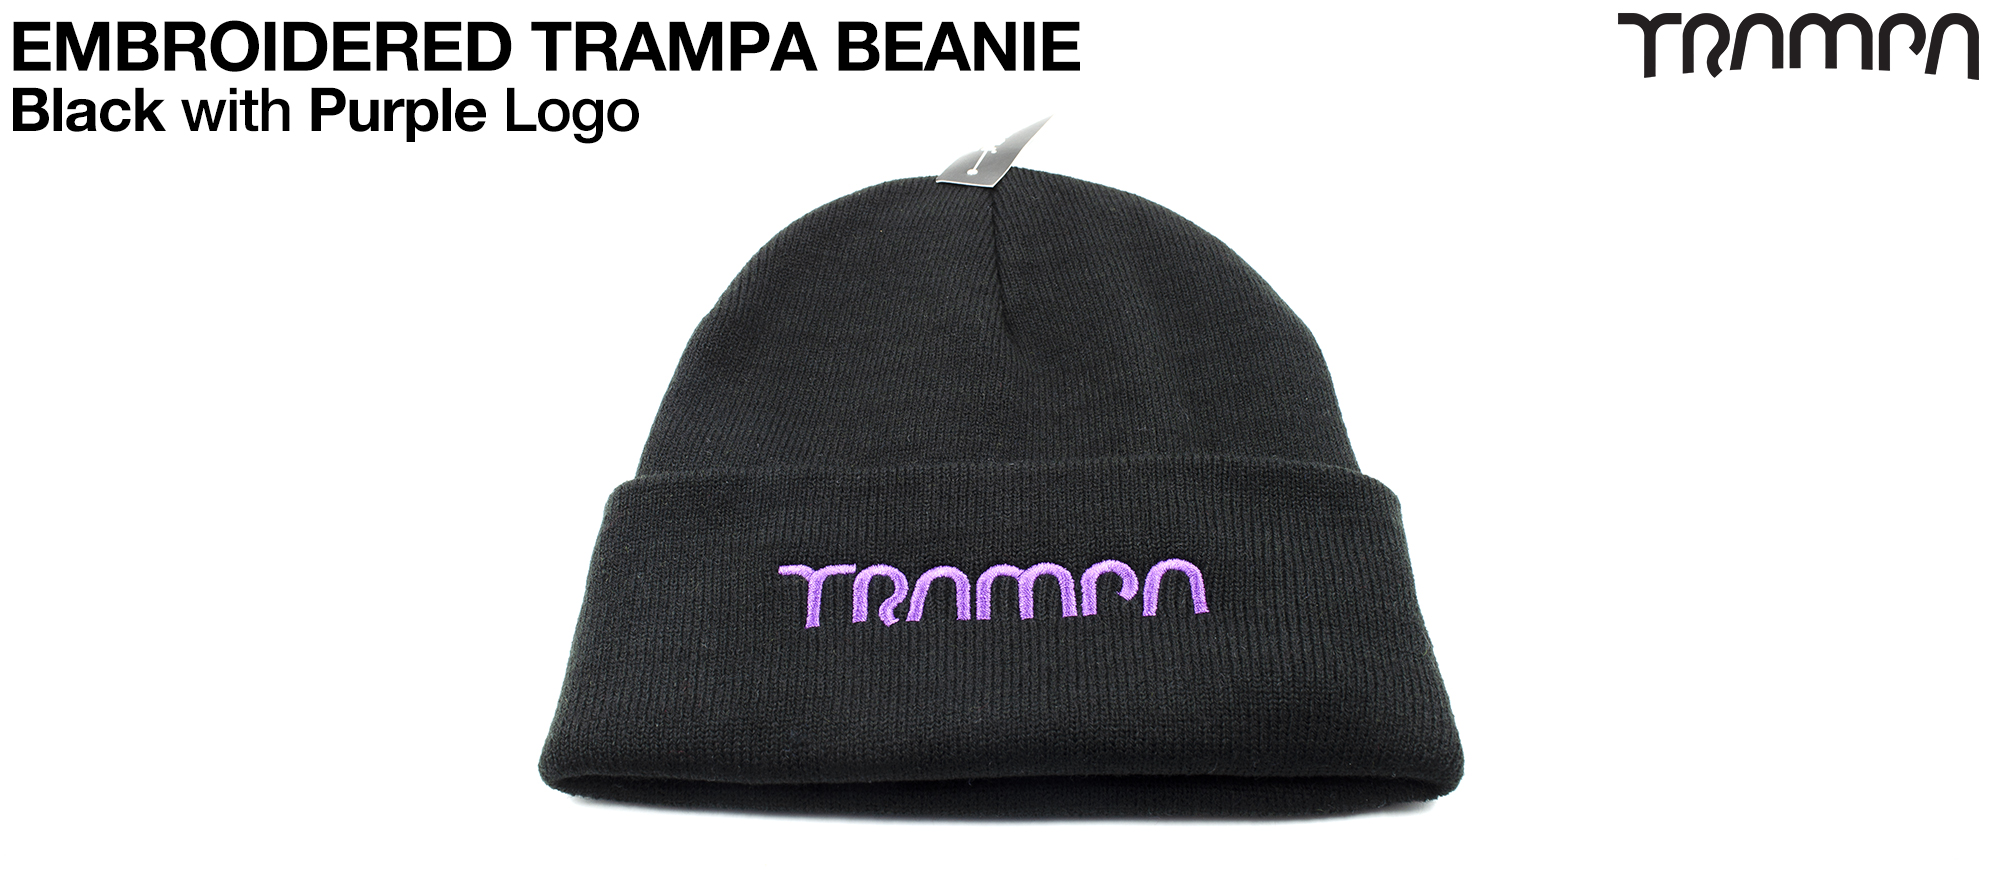 BLACK Beanie with PURPLE TRAMPA Logo 